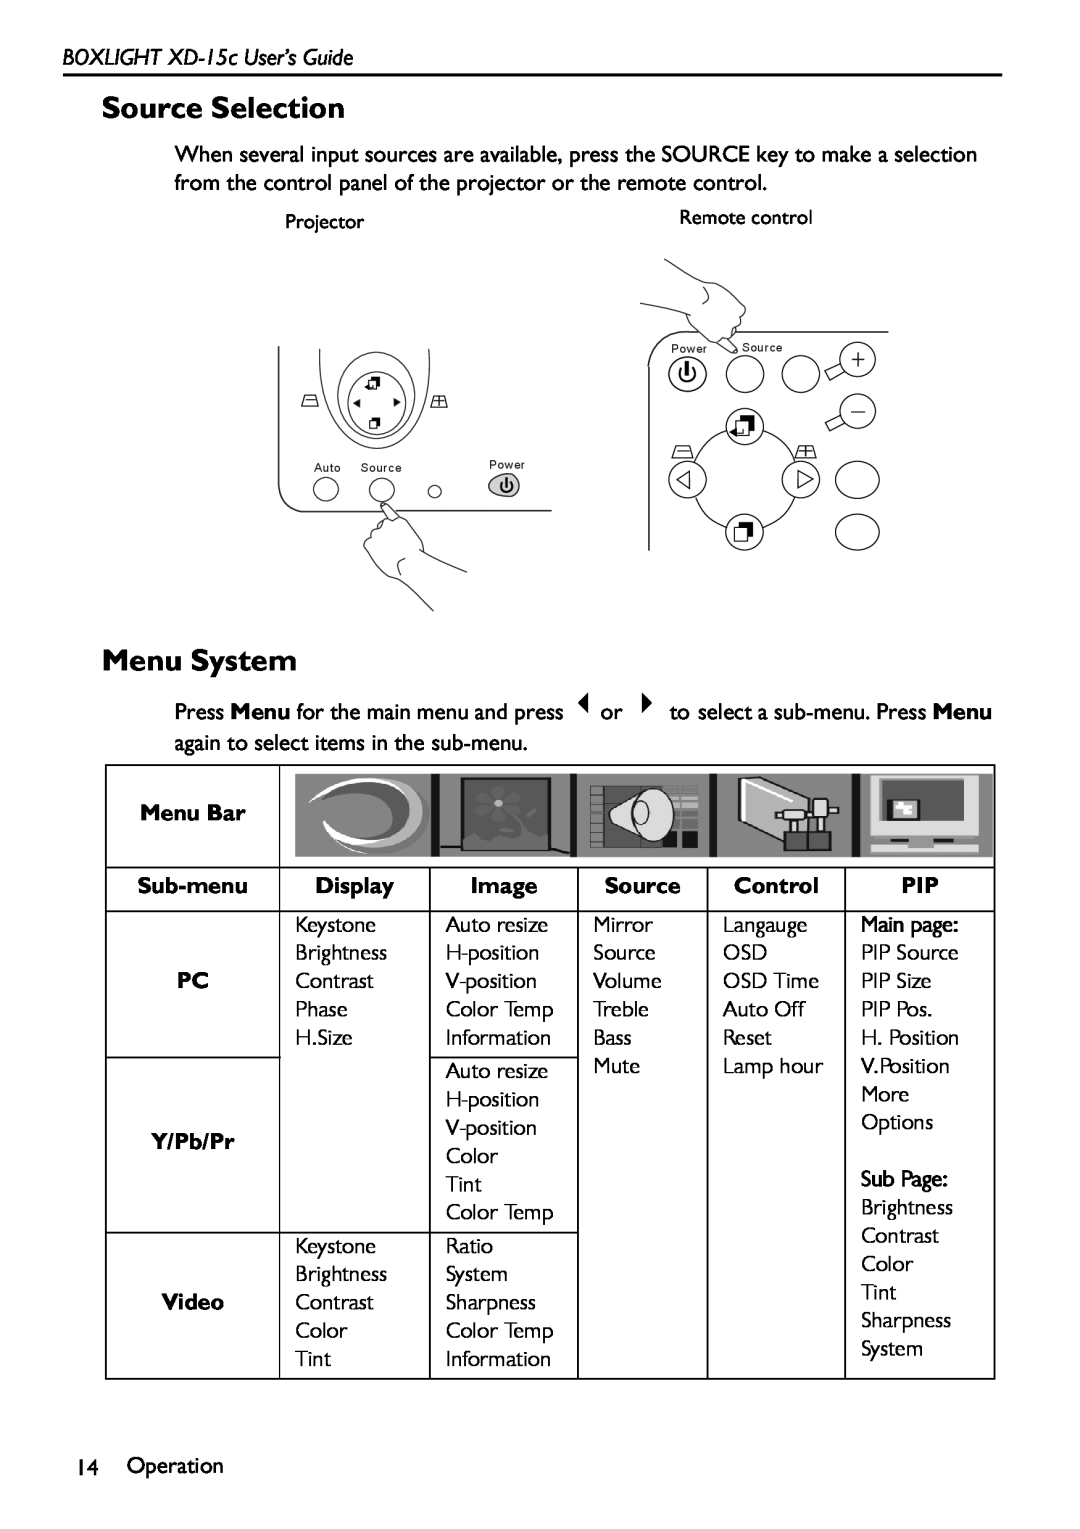 BOXLIGHT manual Source Selection, Menu System, BOXLIGHT XD-15c User’s Guide 